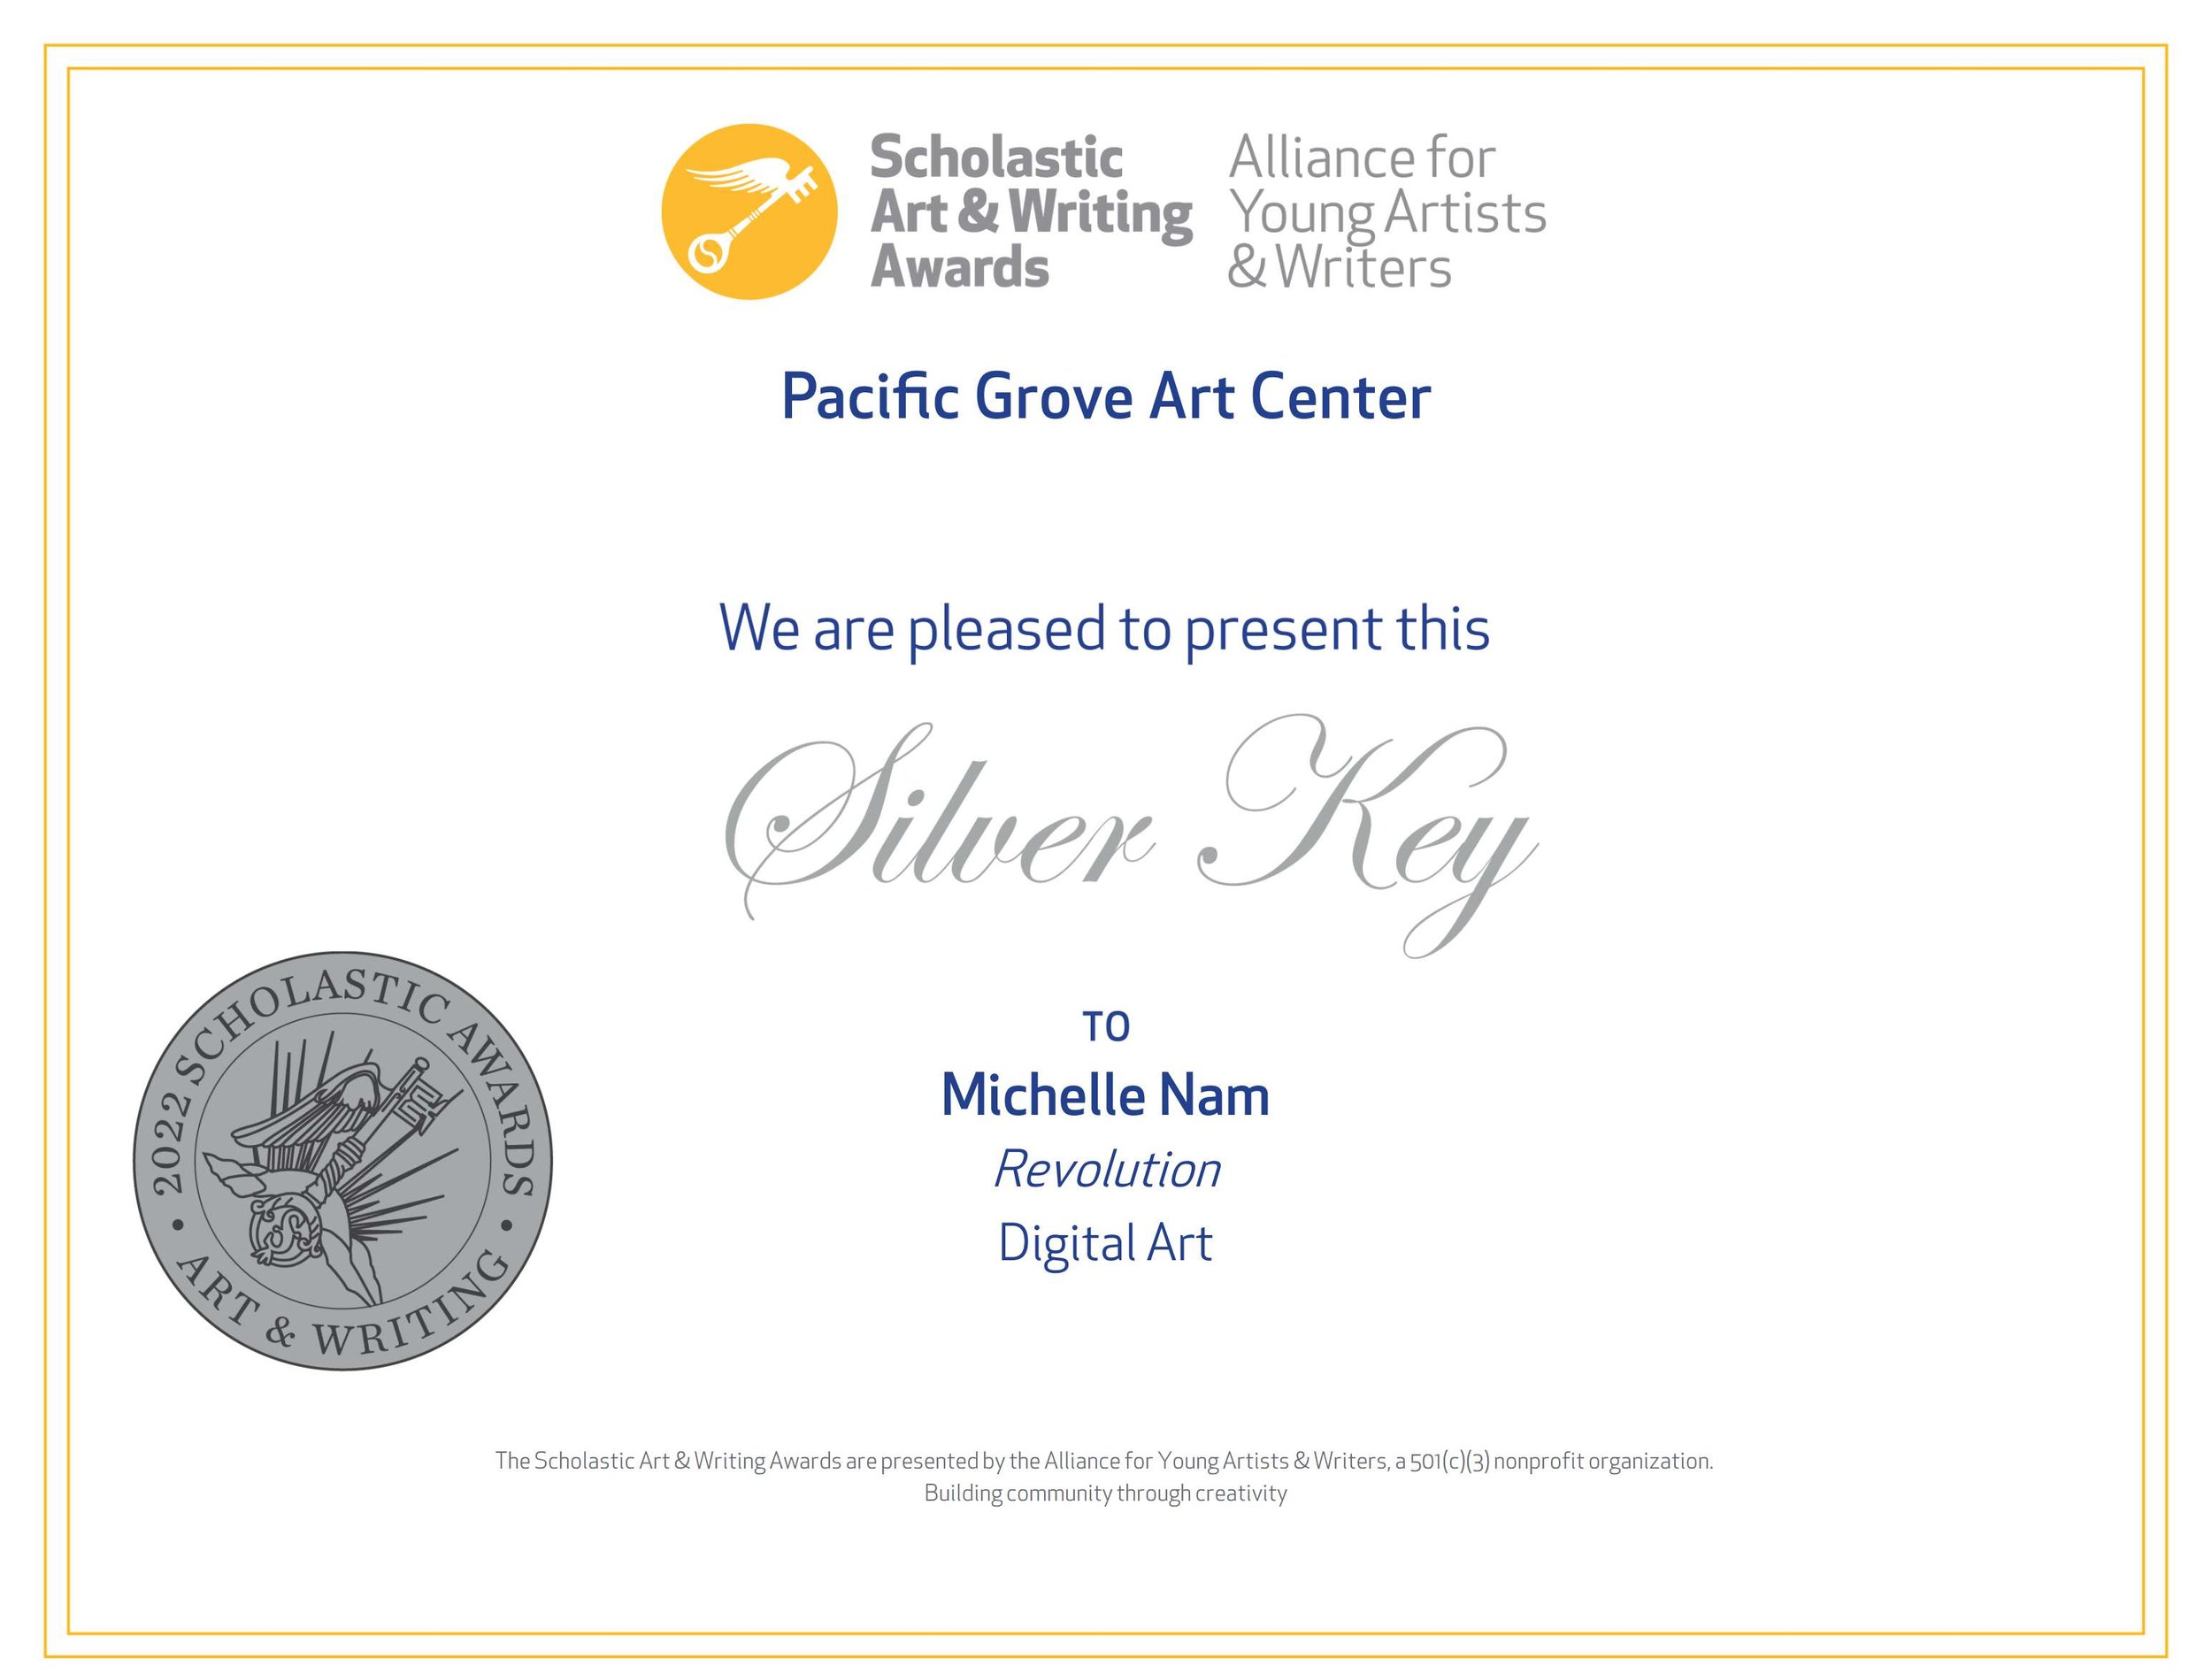 award_certificate_work_14285730_Silver_Key_Nam_Michelle.jpeg